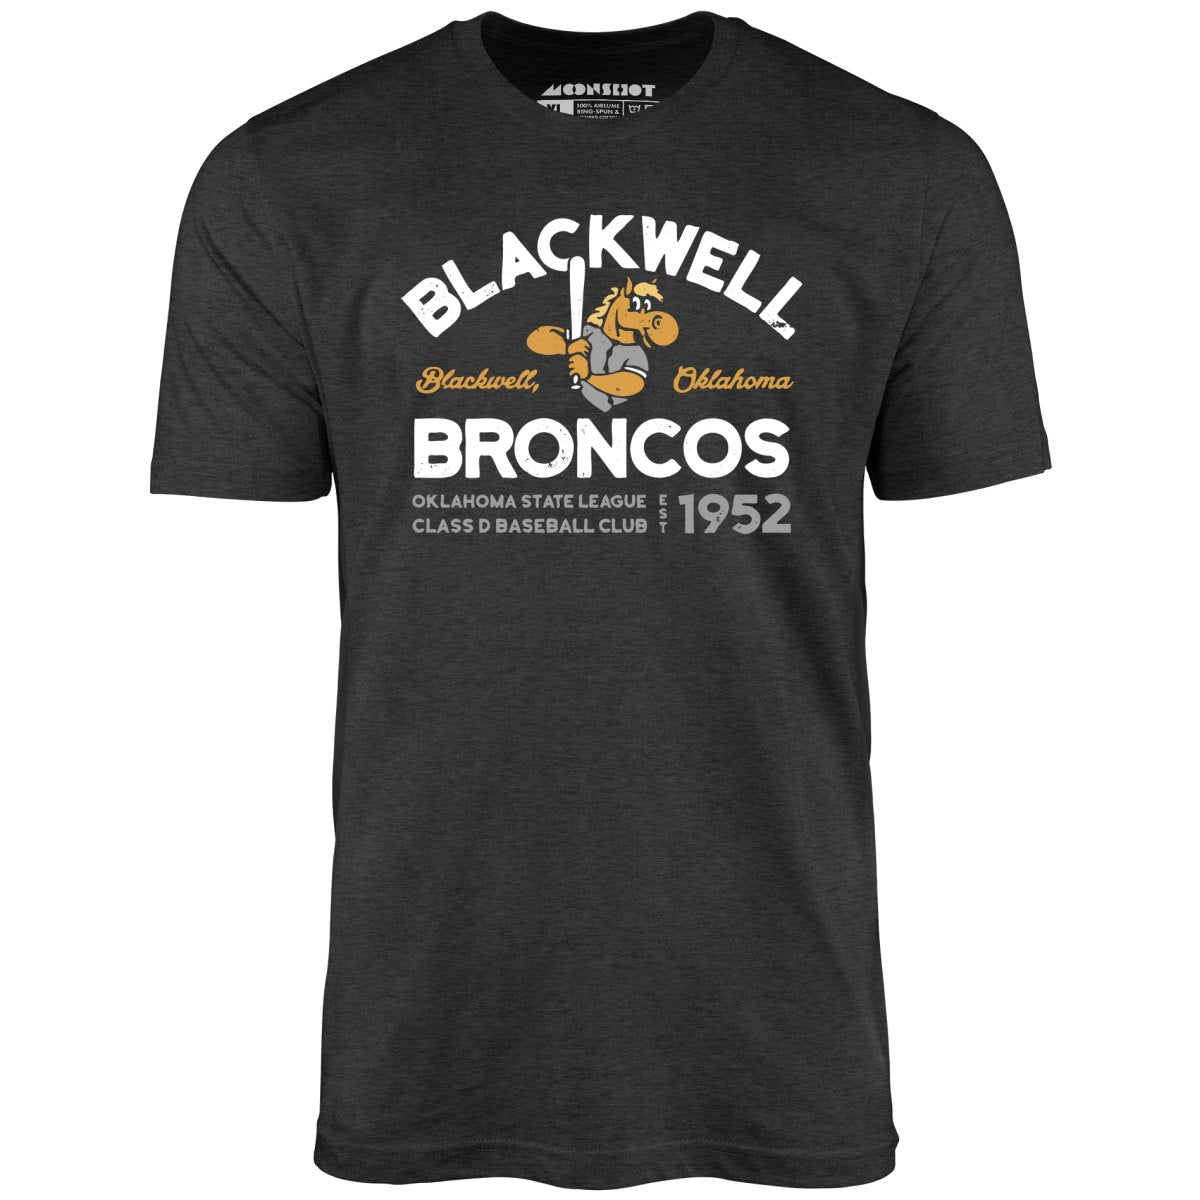 Blackwell Broncos - Oklahoma - Vintage Defunct Baseball Teams - Unisex T-Shirt